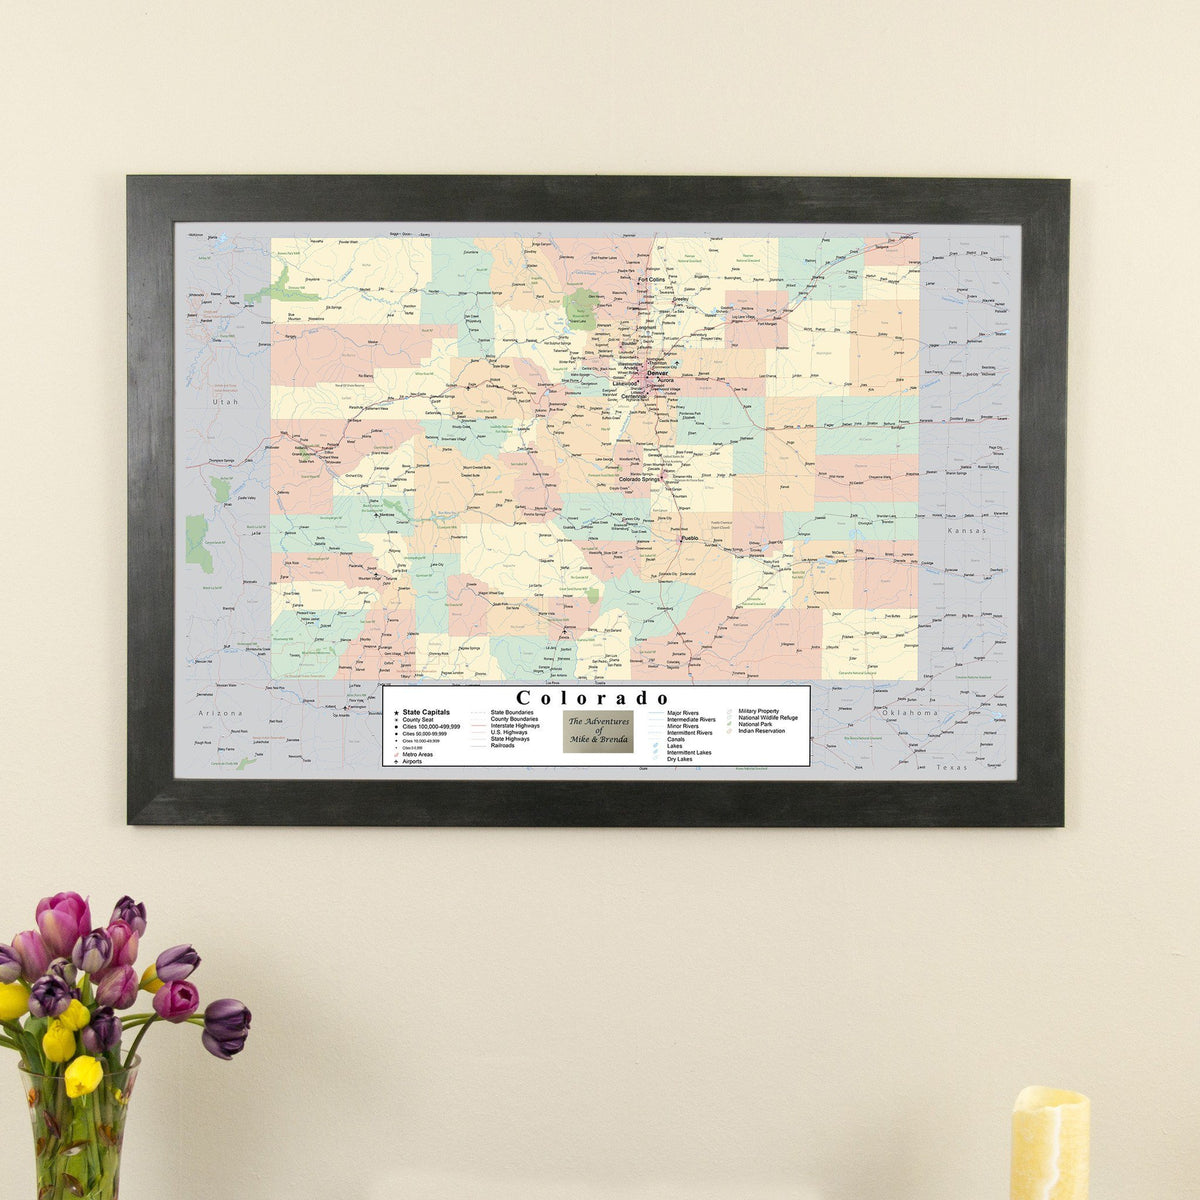 Colorado Push Pin Travel Map in Rustic Black Frame